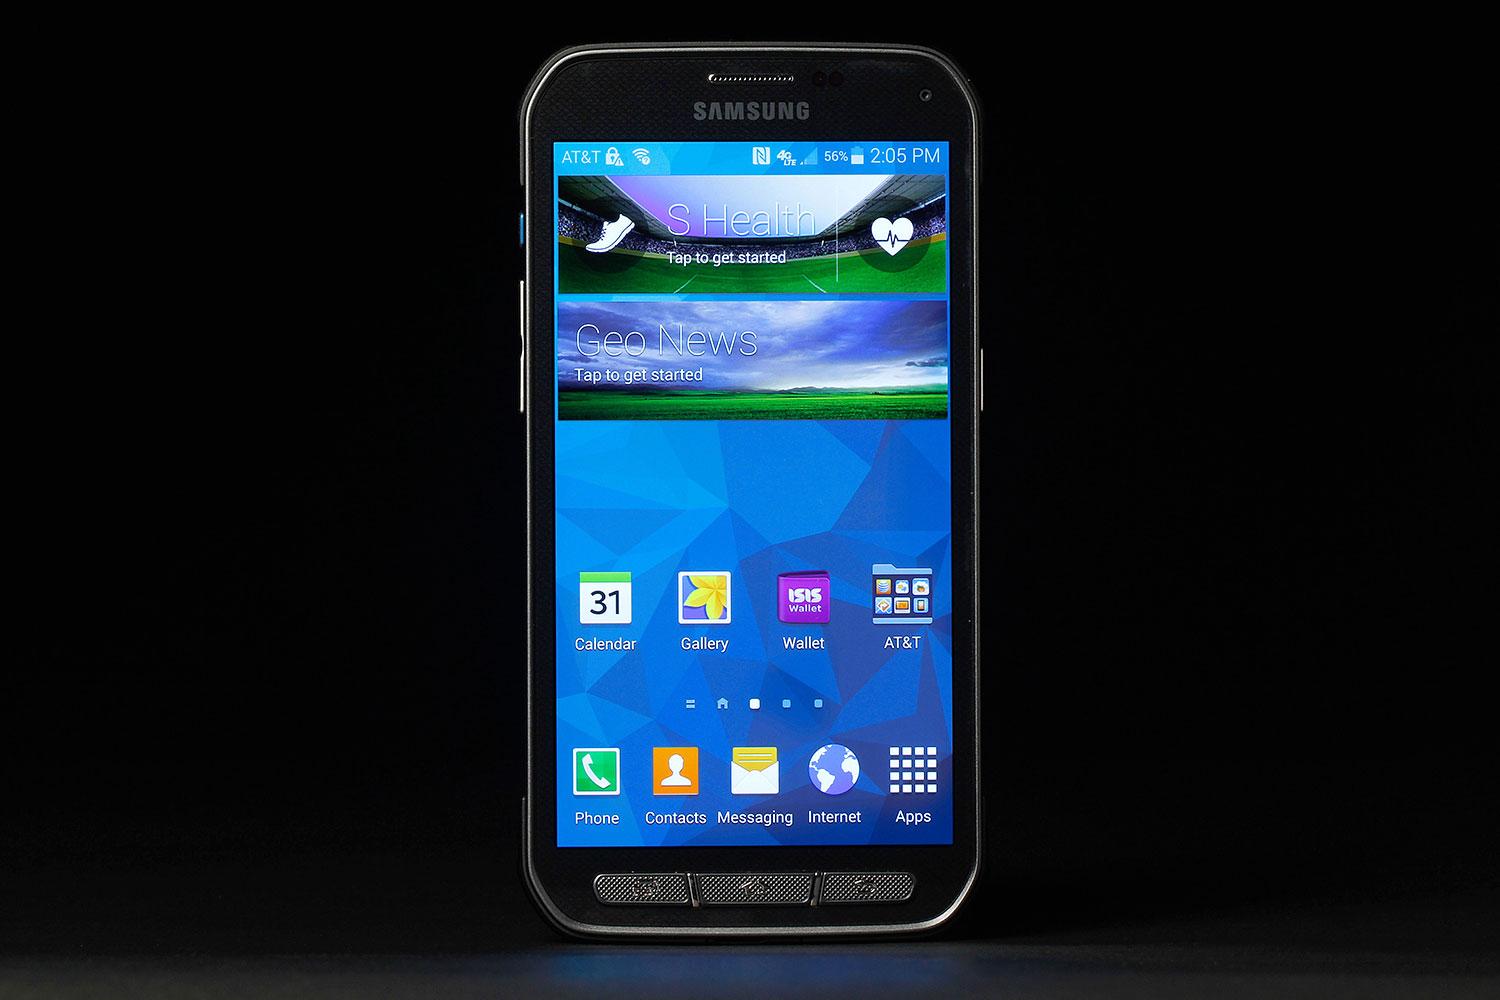 Samsung Galaxy S5 Active home screen